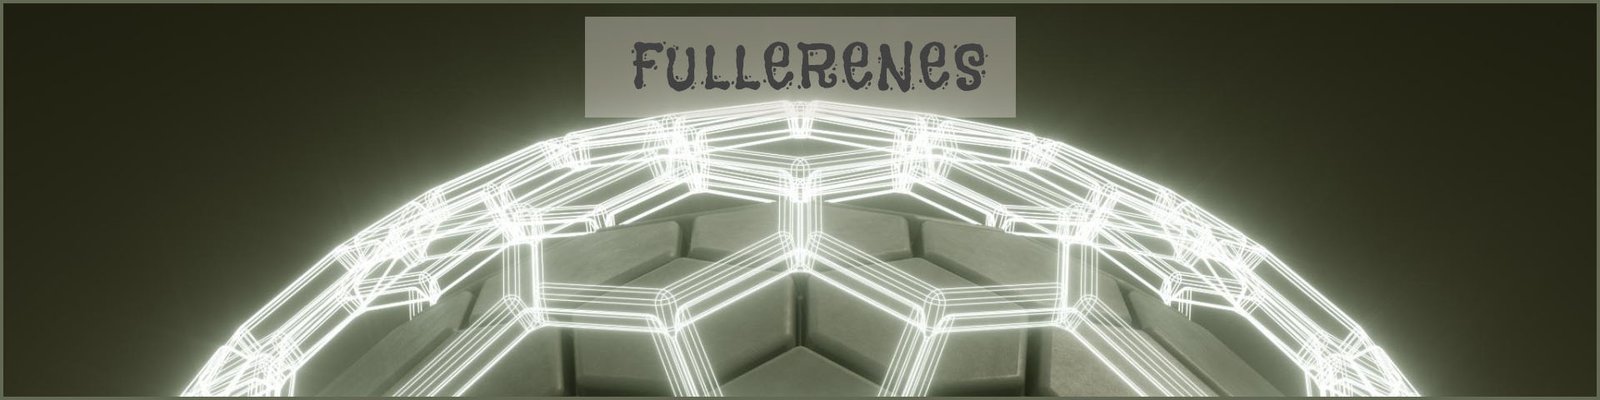  fullerenes image